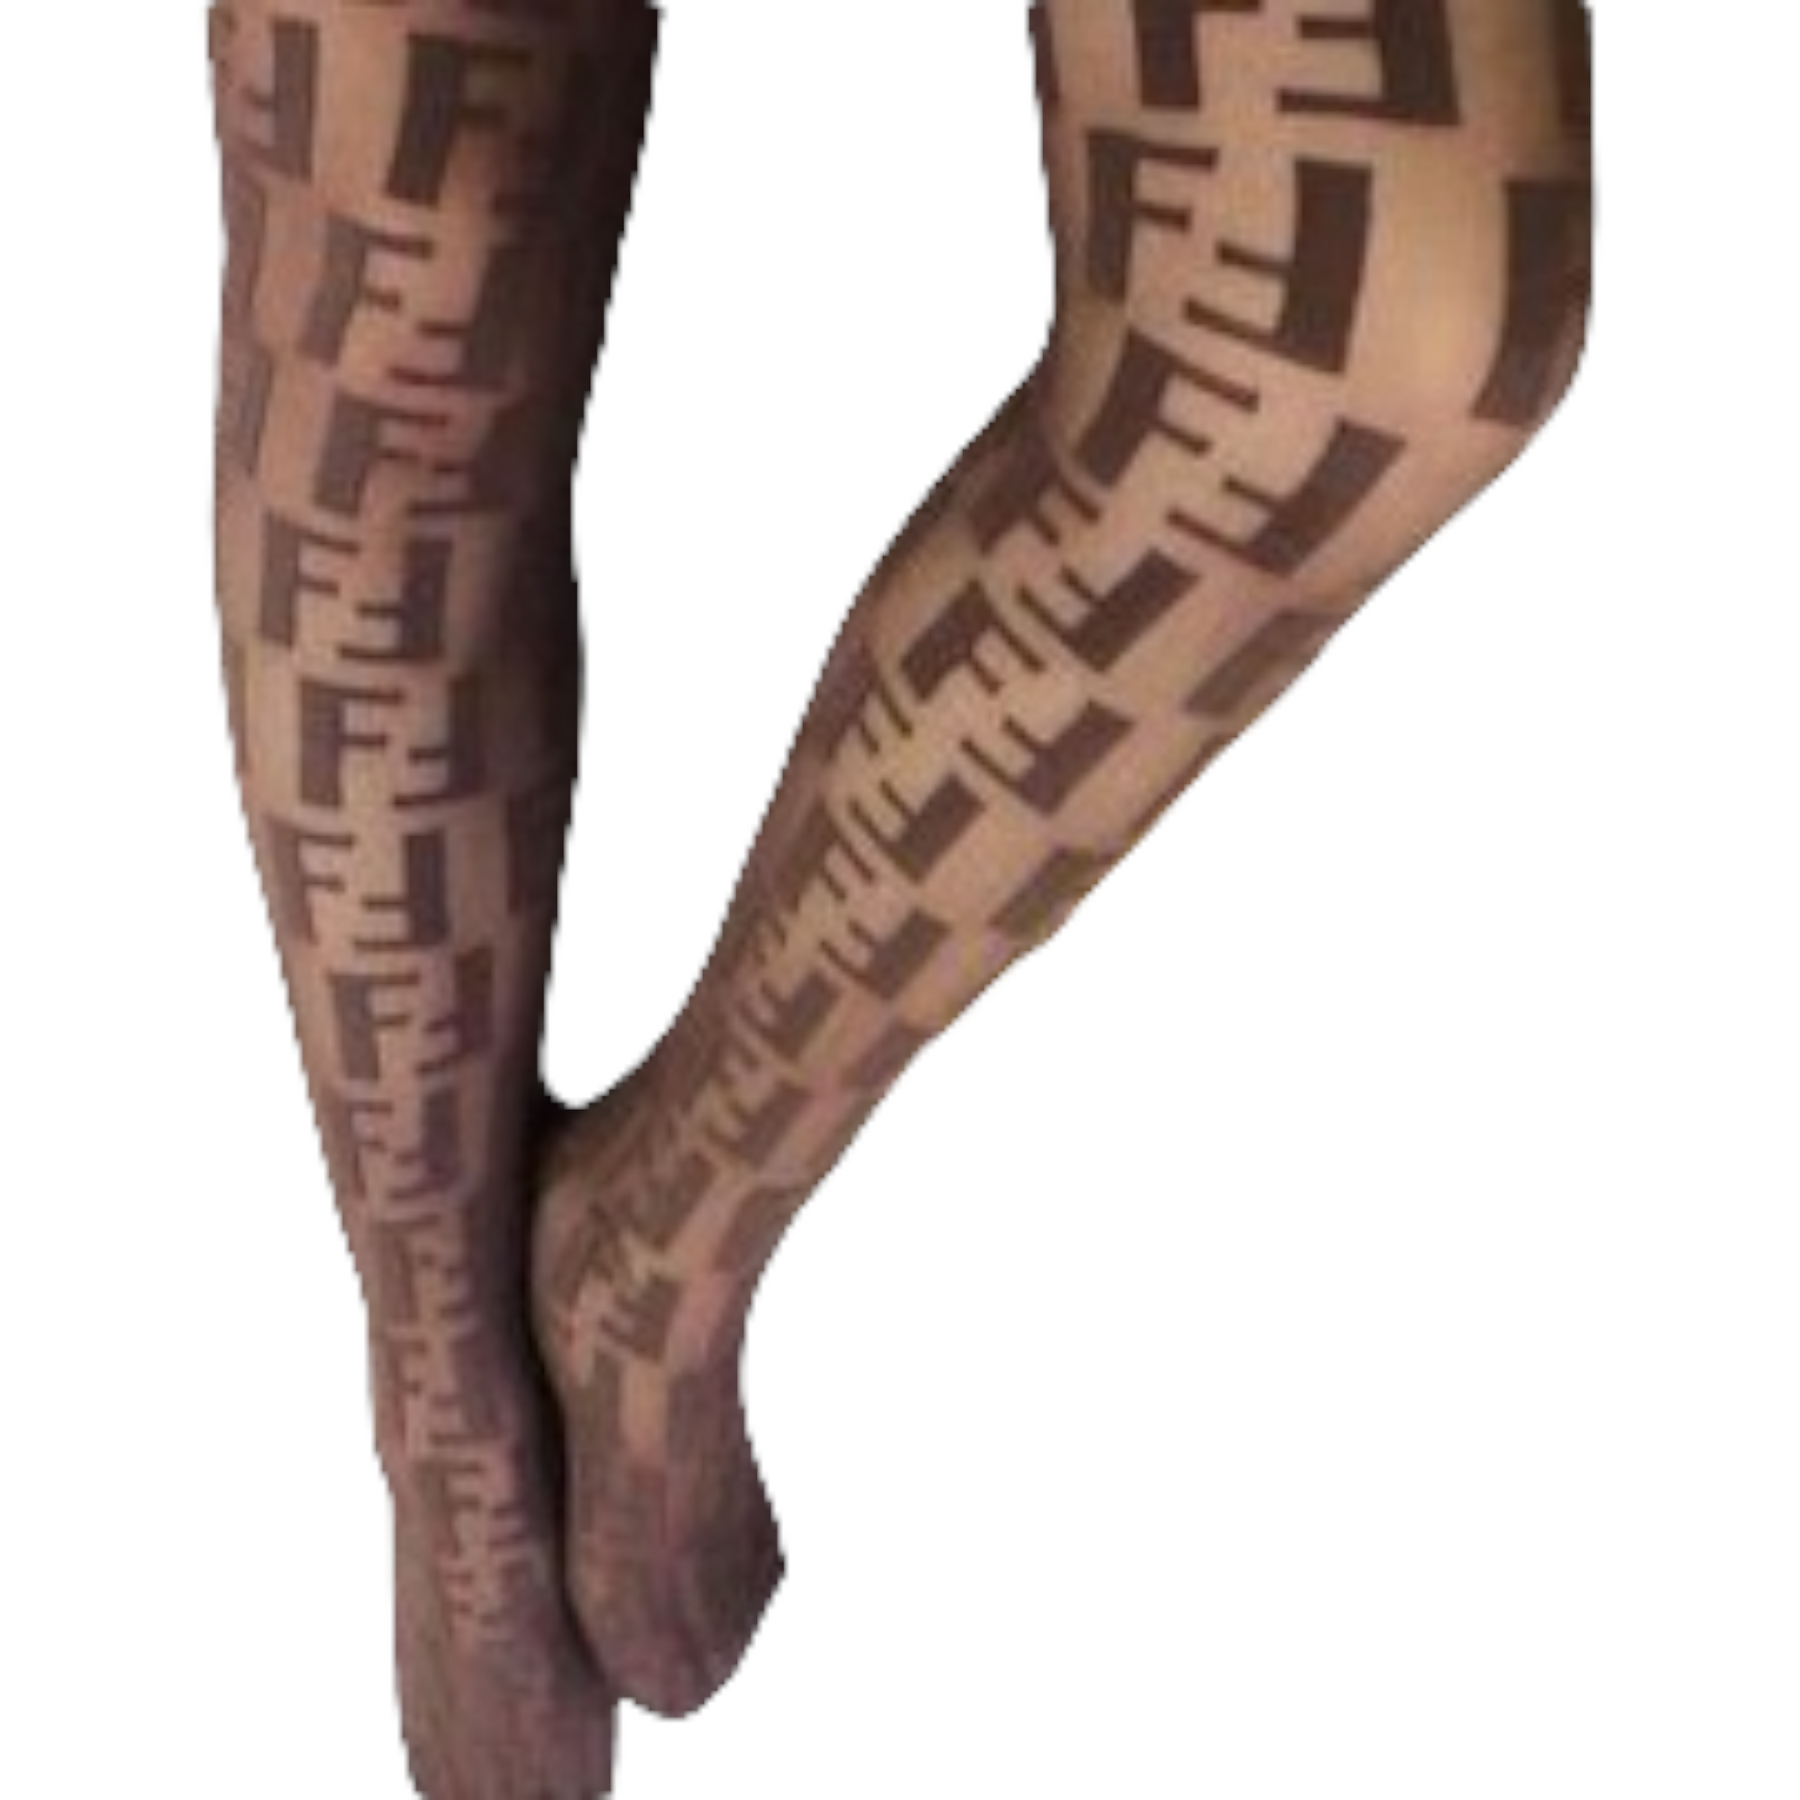 FF Logo Tights Stockings